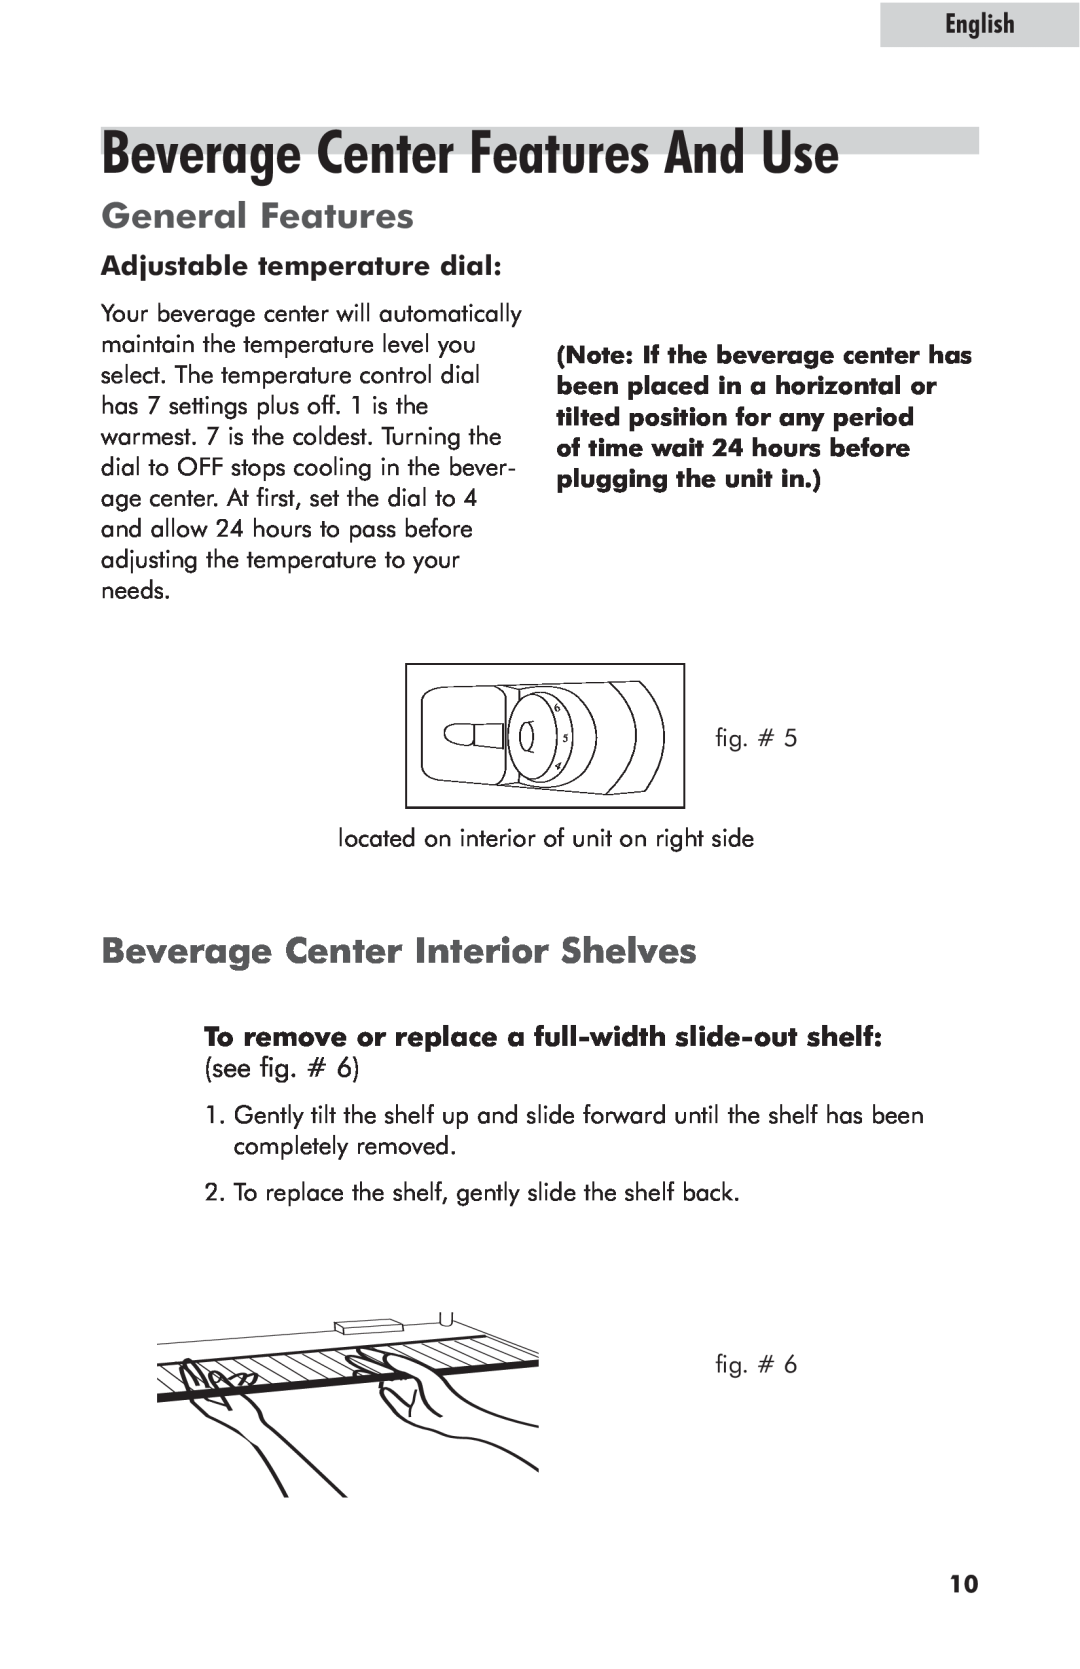 Haier hc125fvs user manual General Features, Beverage Center Interior Shelves, Adjustable temperature dial, English 